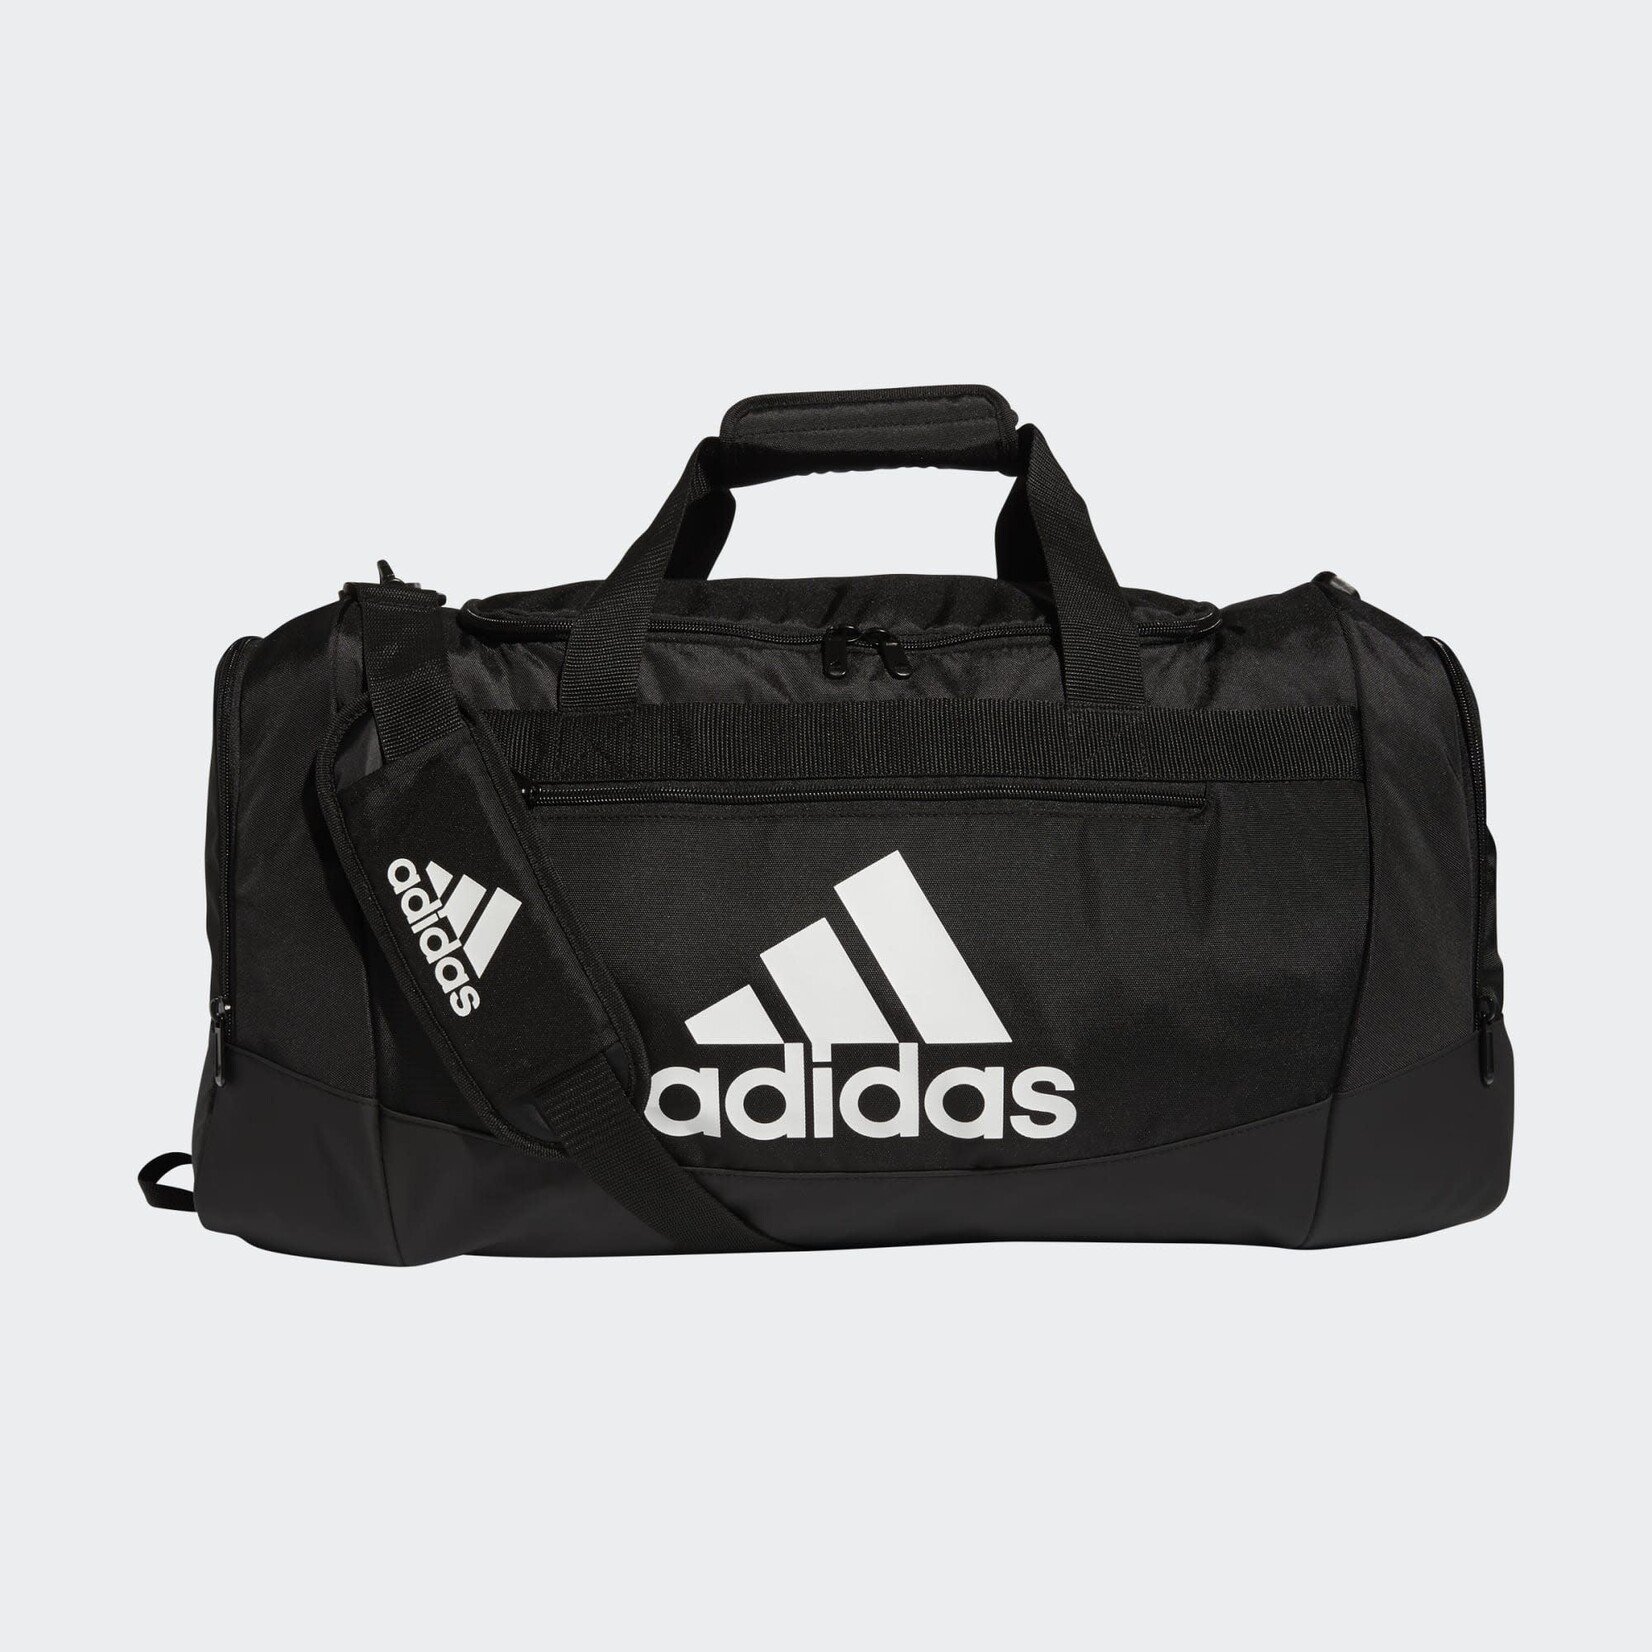 Adidas Adidas Duffel Bag, Defender IV Medium